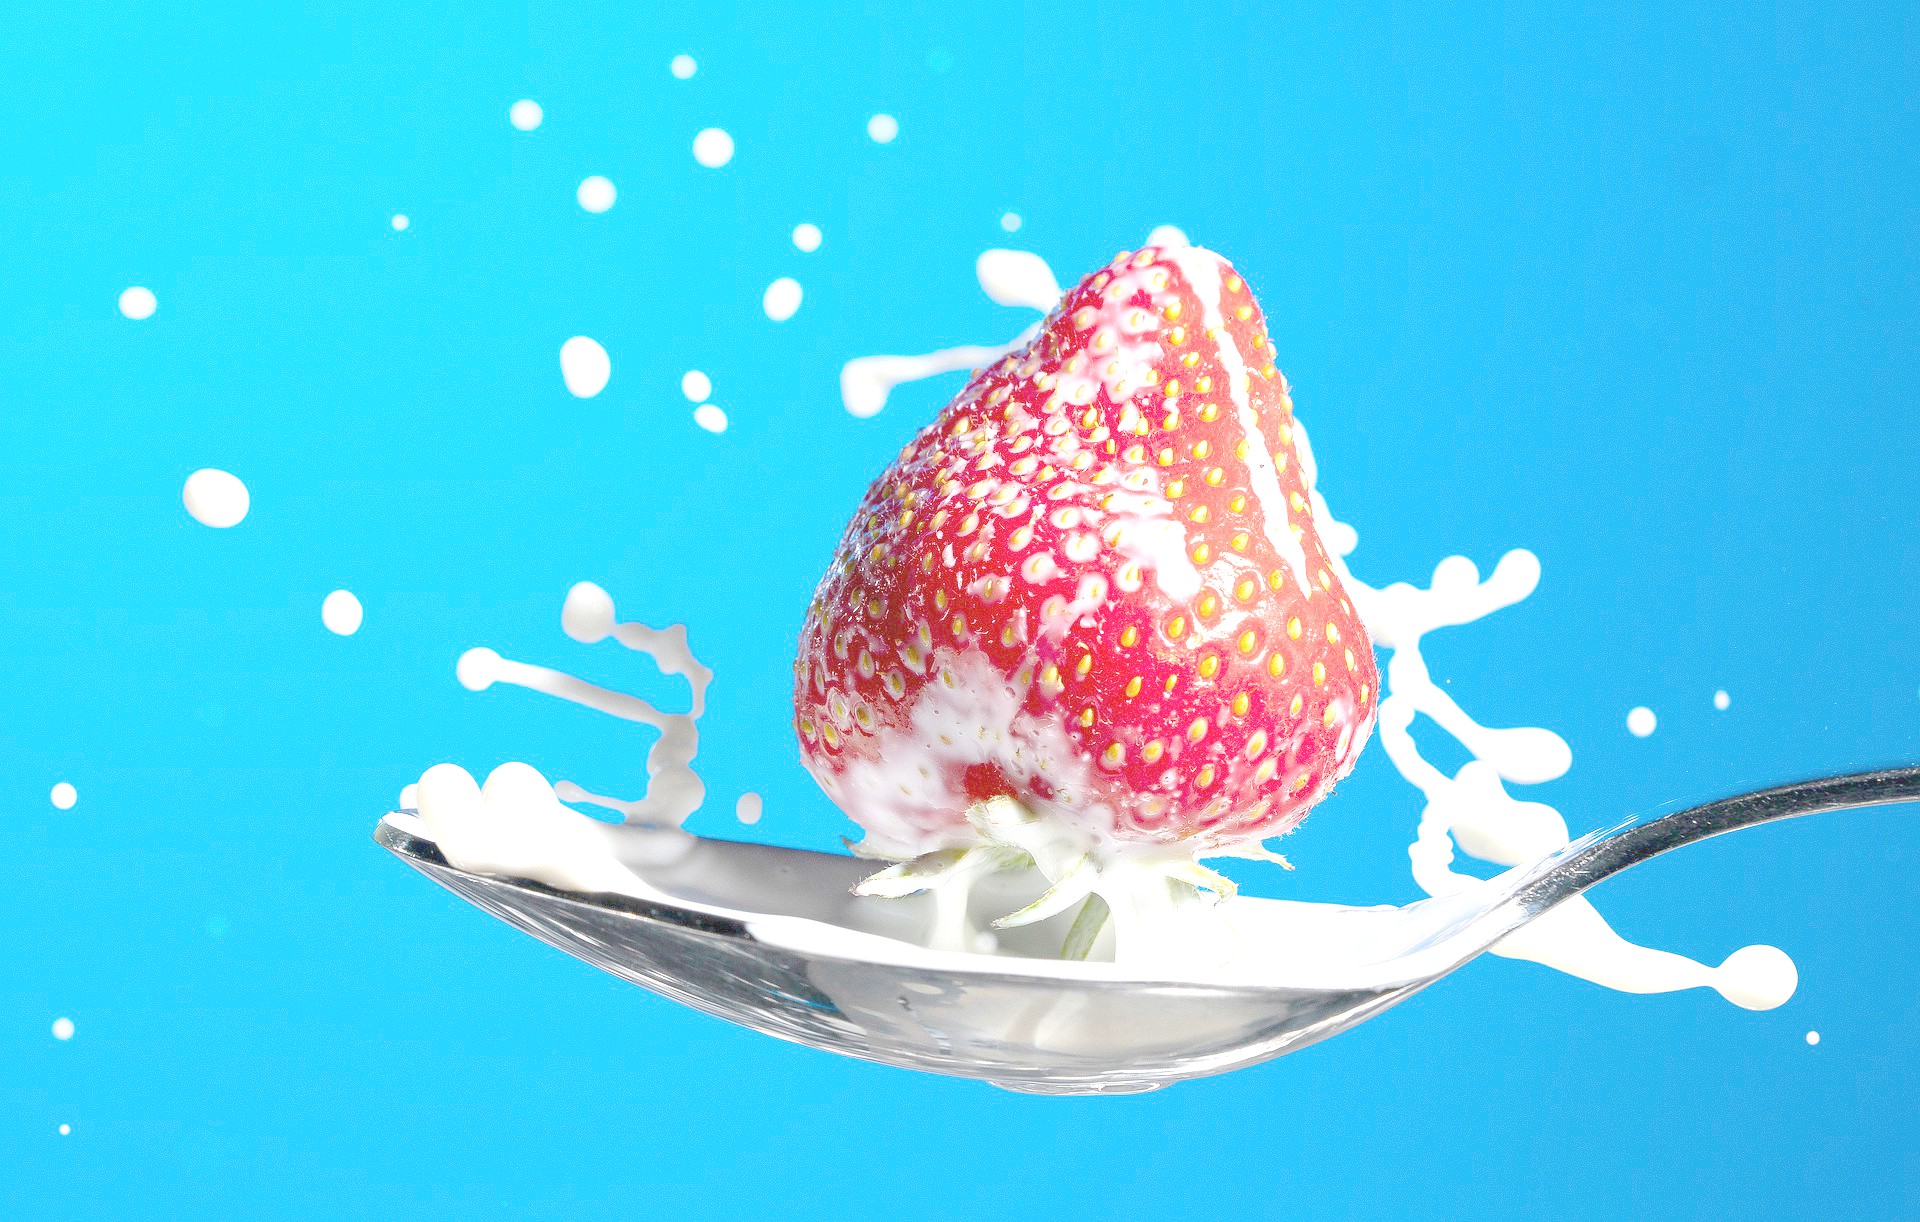 <img src="strawberry.jpg" alt="strawberry and cream on spoon"/> 